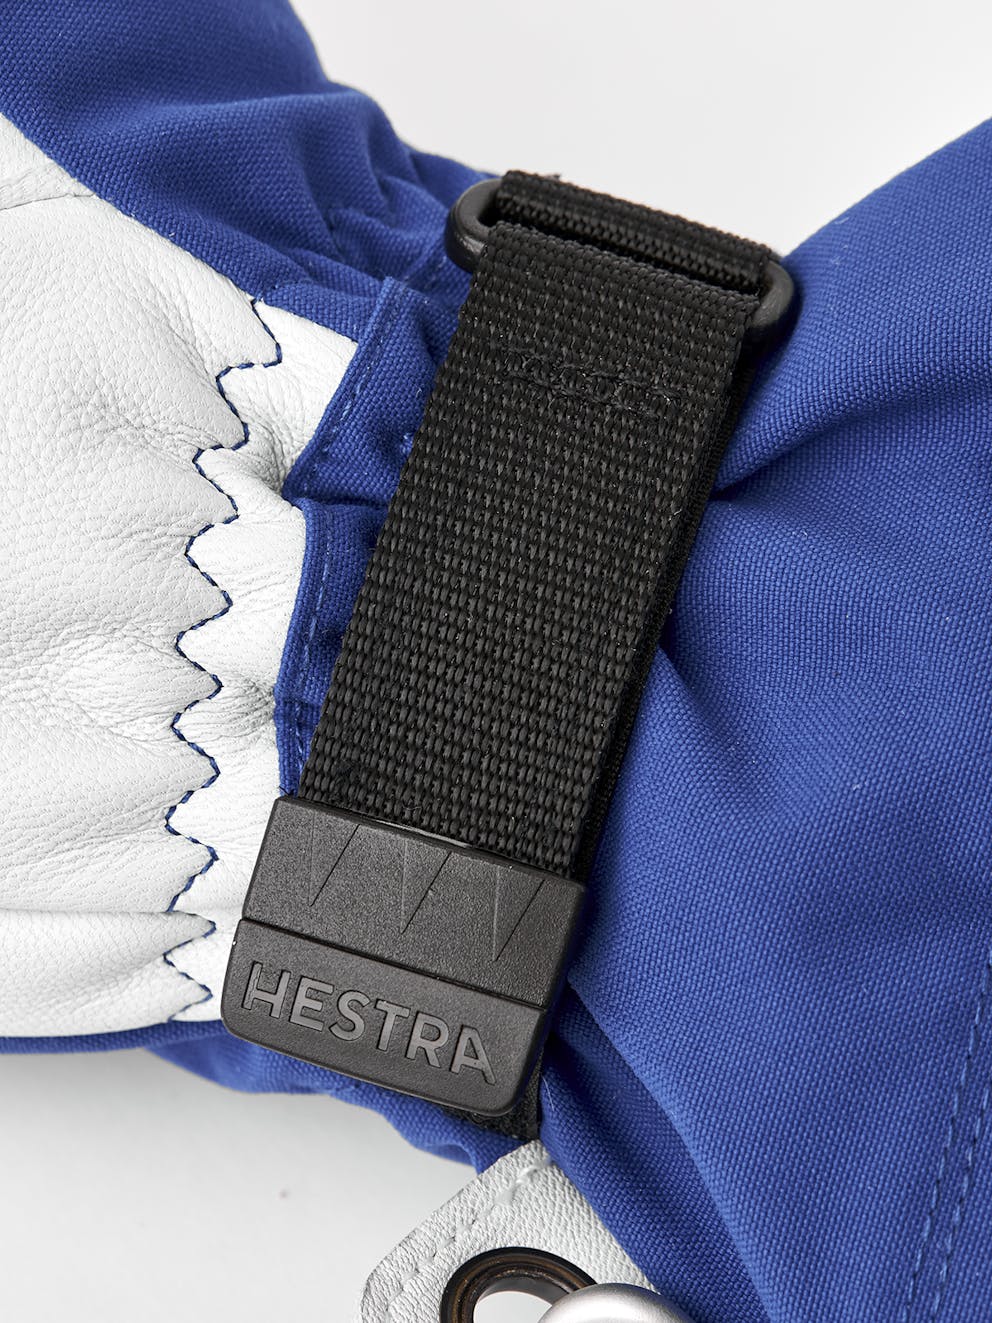 - Leather Hestra Army Gloves Ski Heli | Royal blue